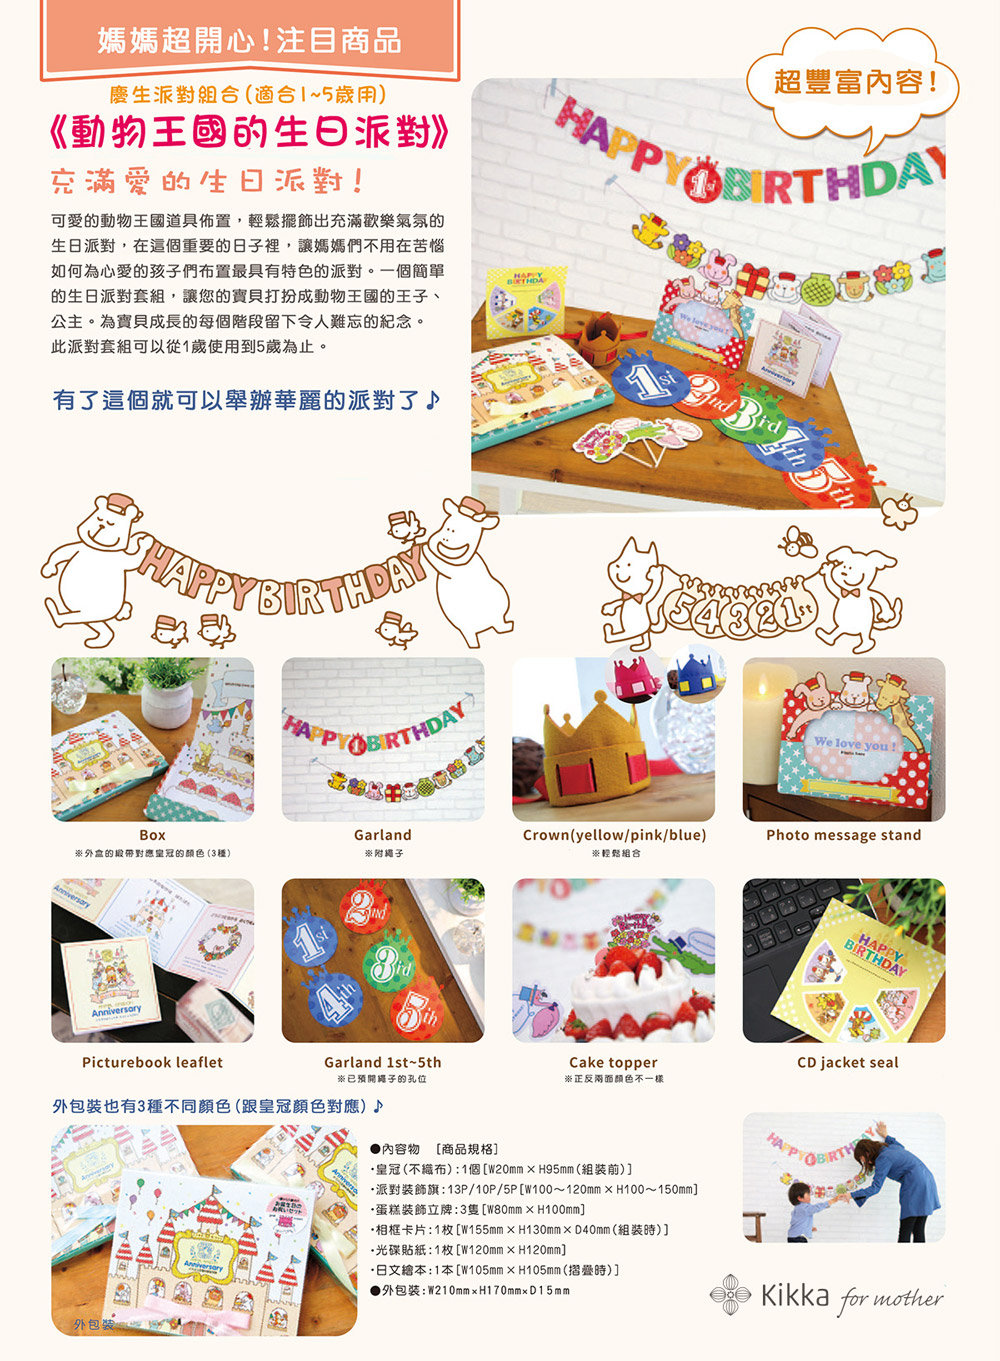 kikka-birthday-party-info01